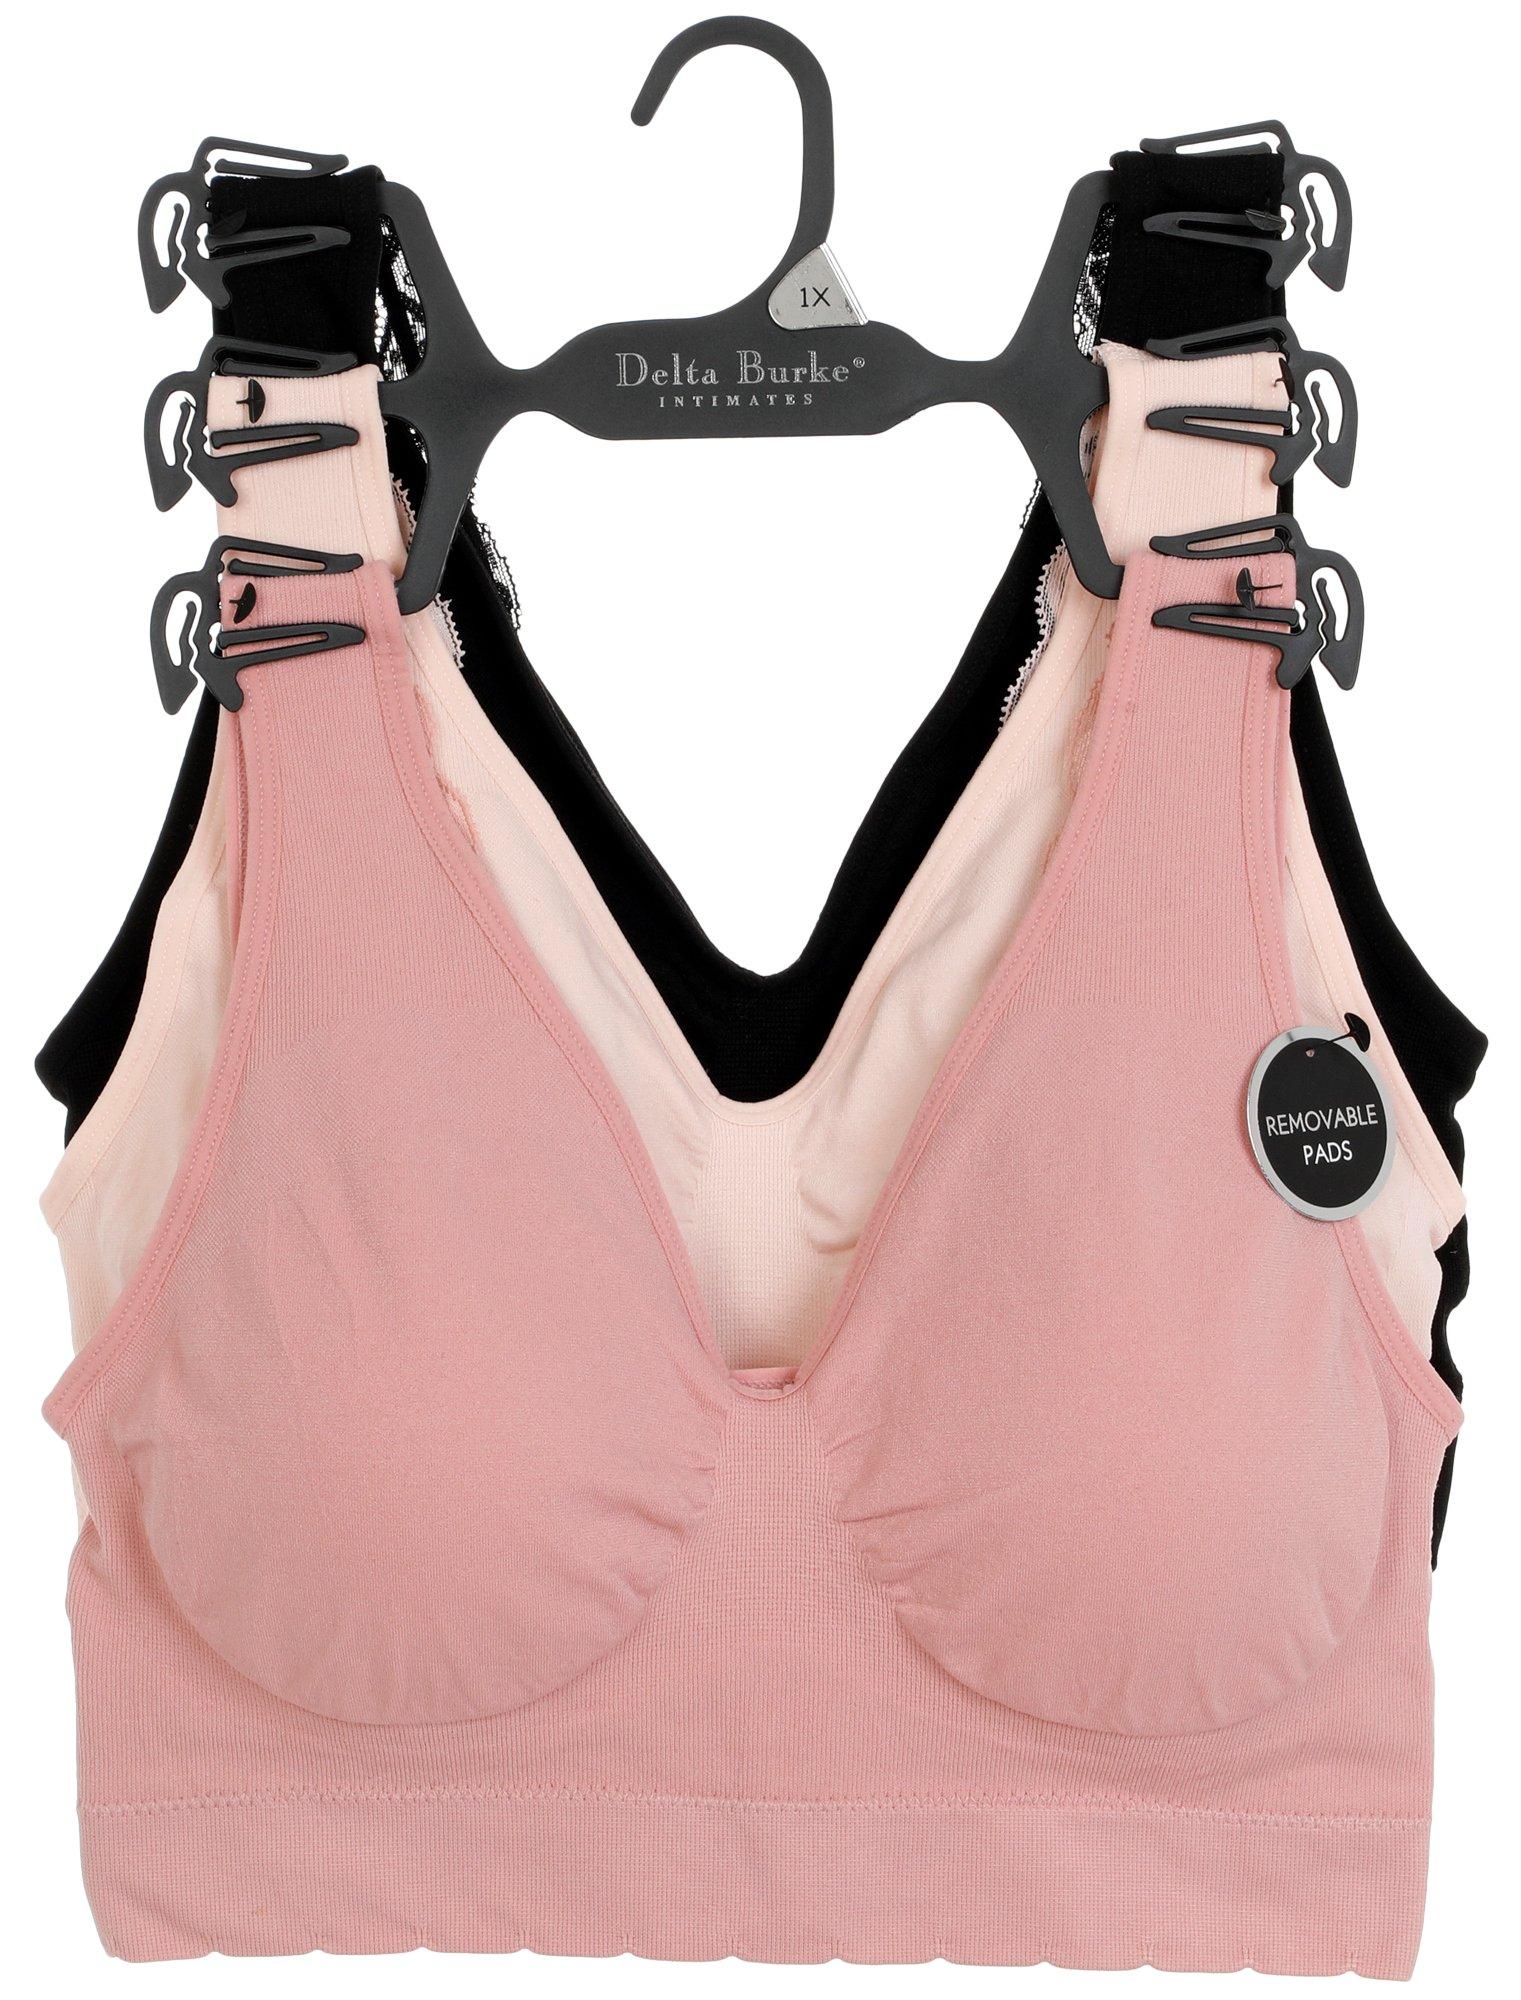 laura ashley bra sets bras New brand